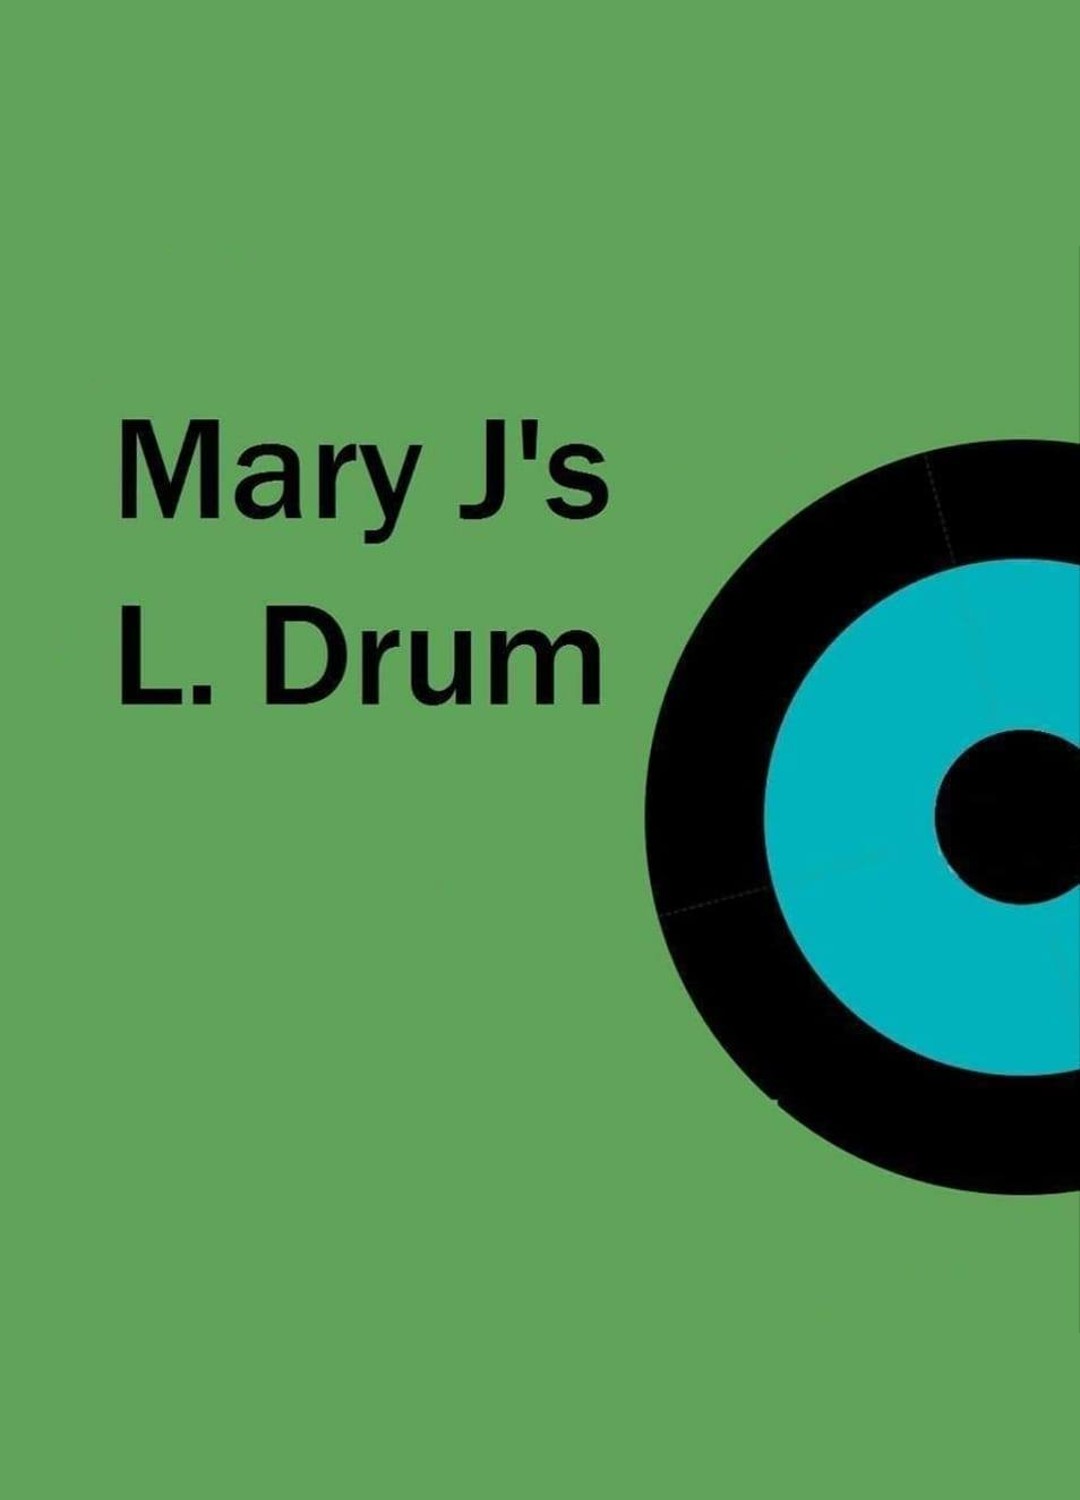 Mary Jane's Little Drum